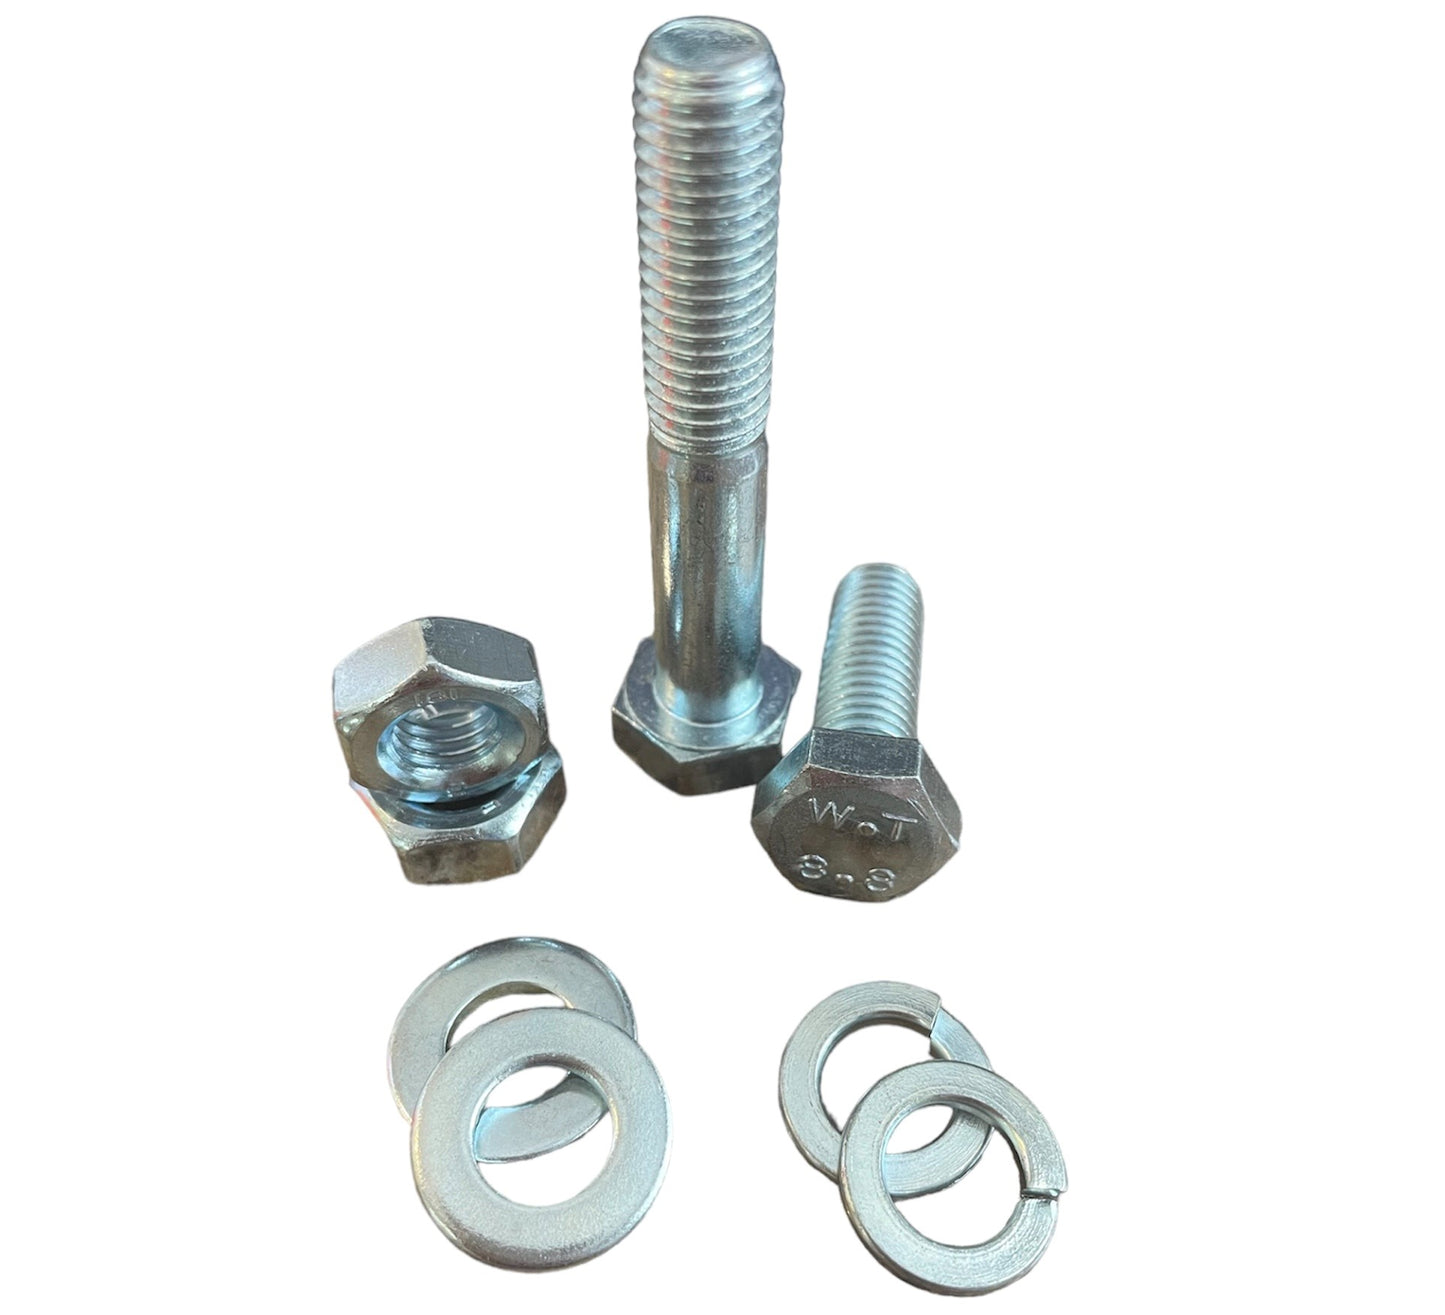 2,540 pcs Metric Class 8.8 Nut Bolt & Washer Assortment Kit with Metal Bin